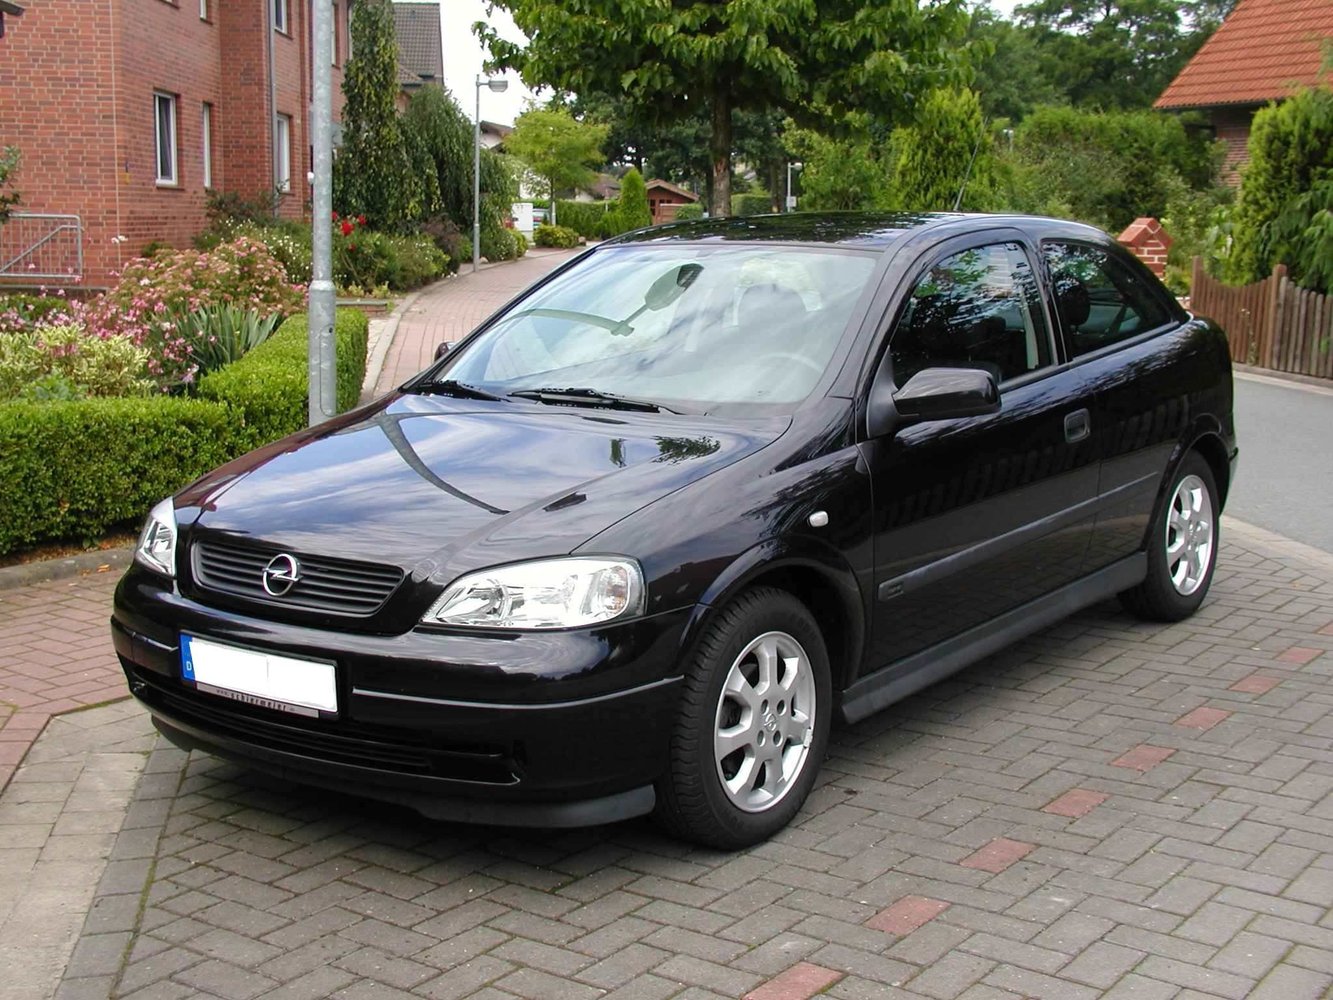 Opel Astra 1998 - 2004